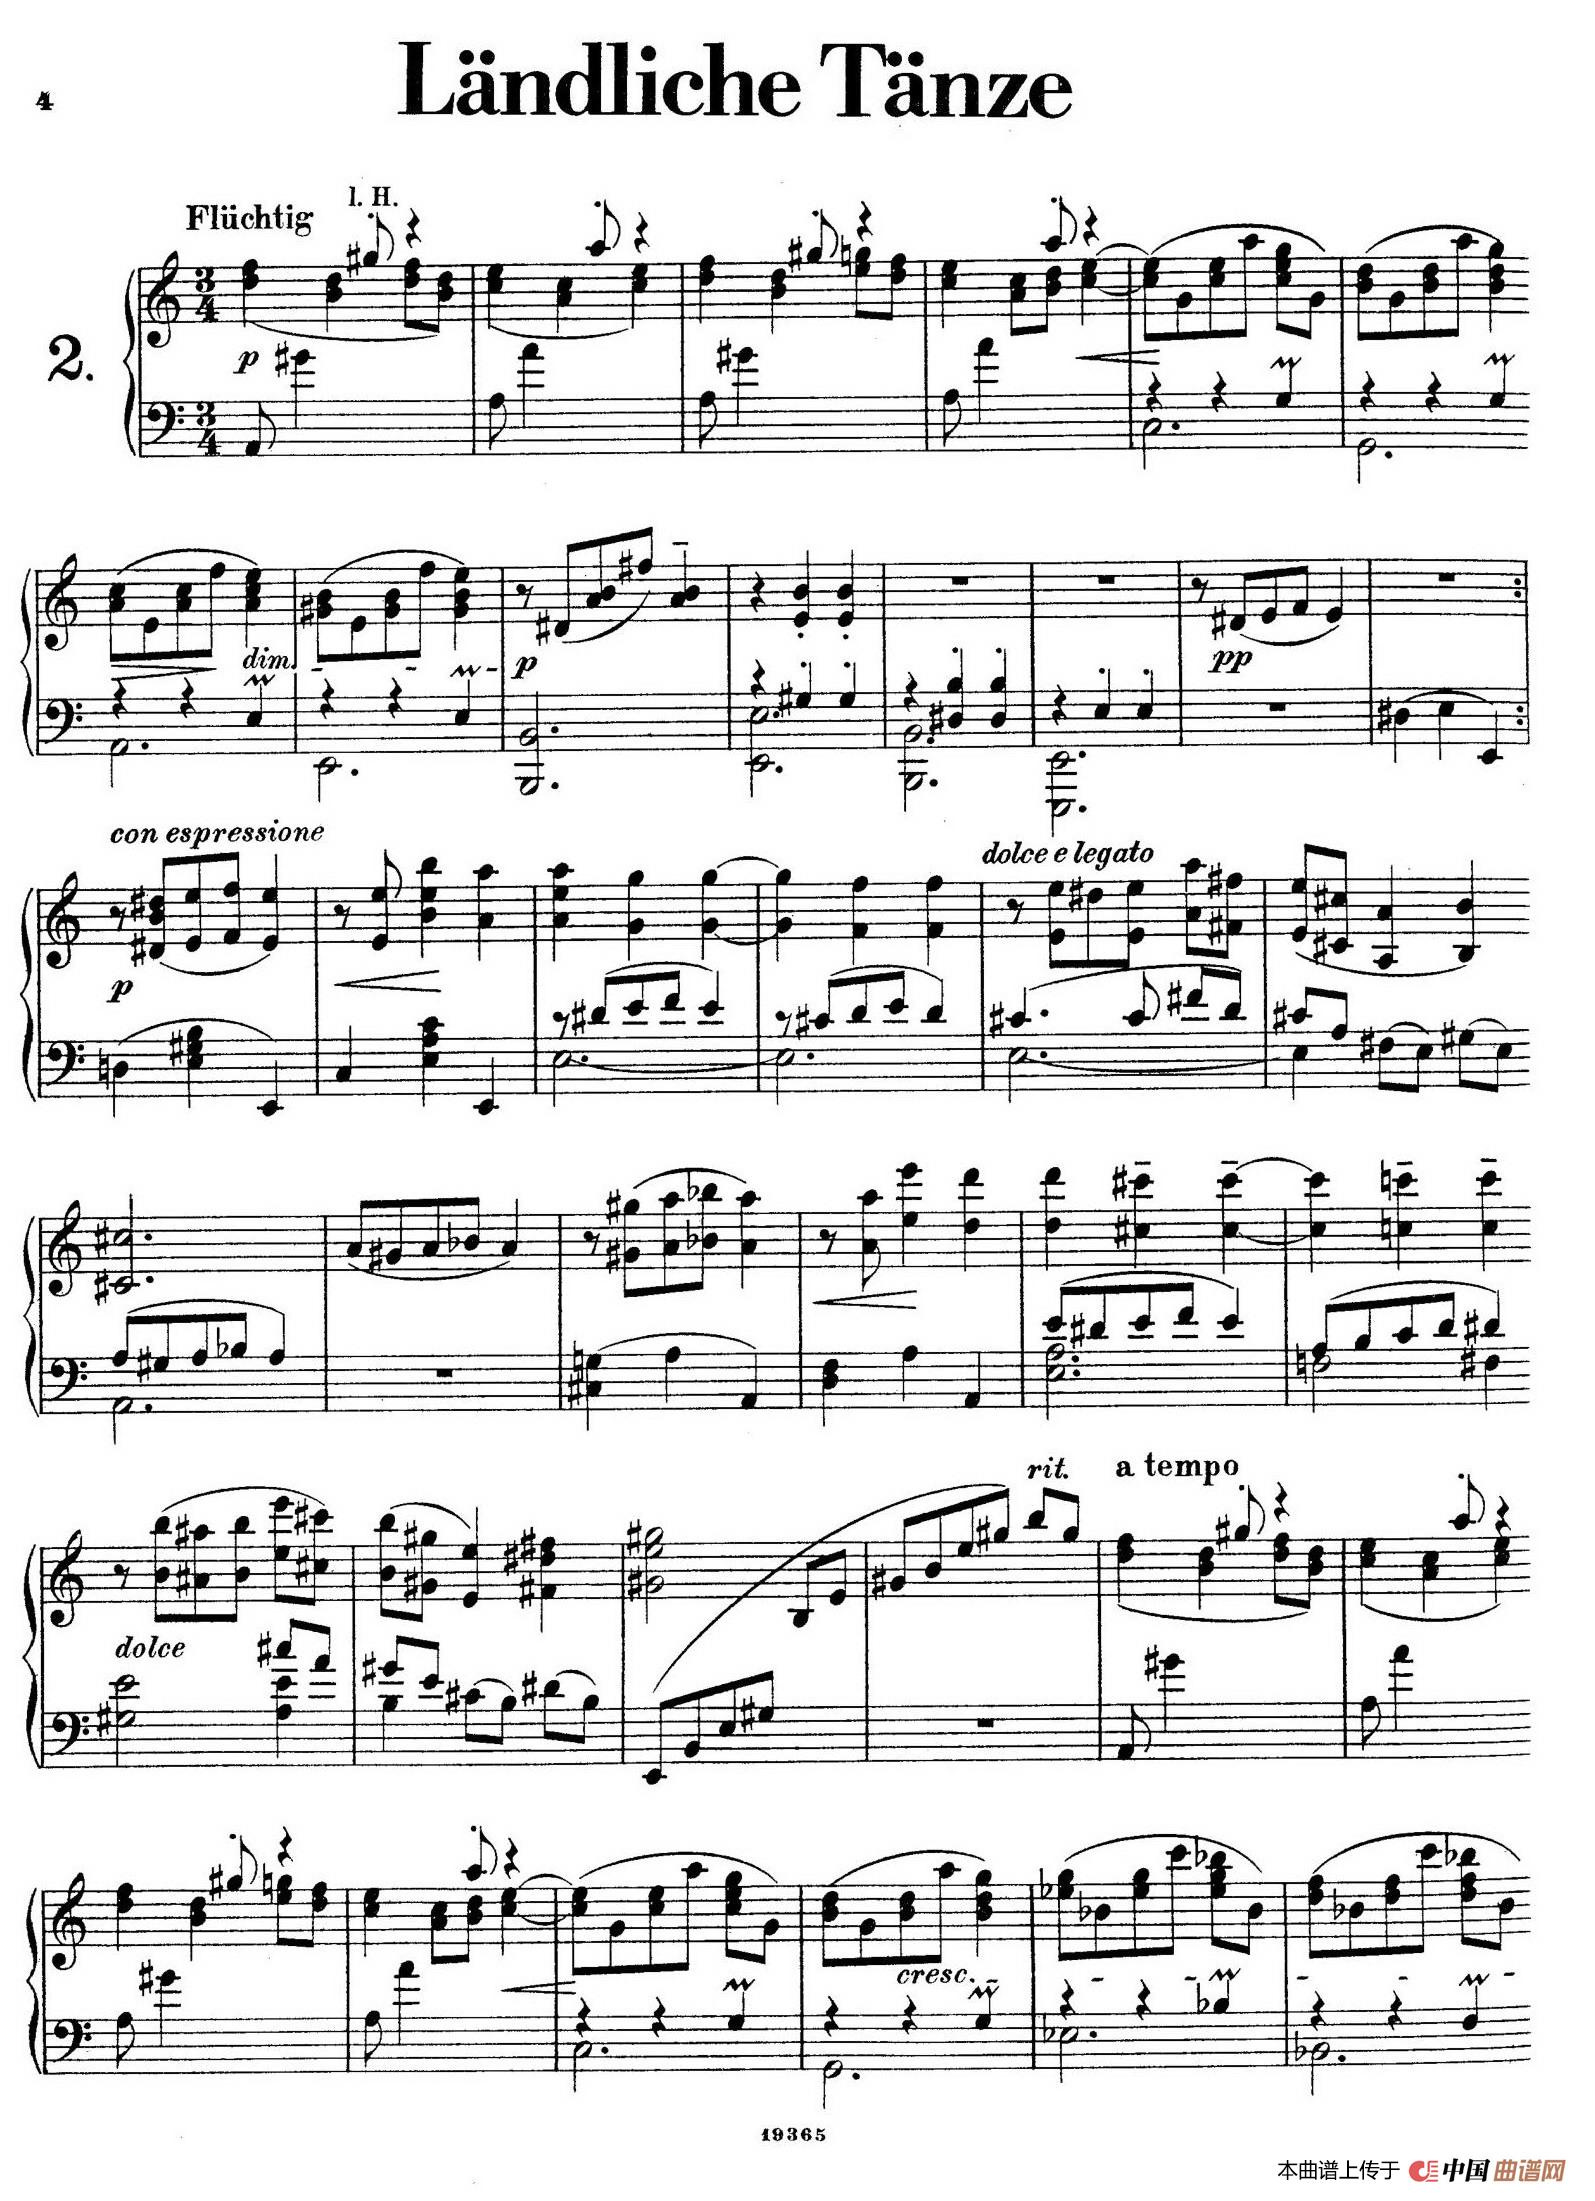 《Landliche Tanzee Op.1》钢琴曲谱图分享